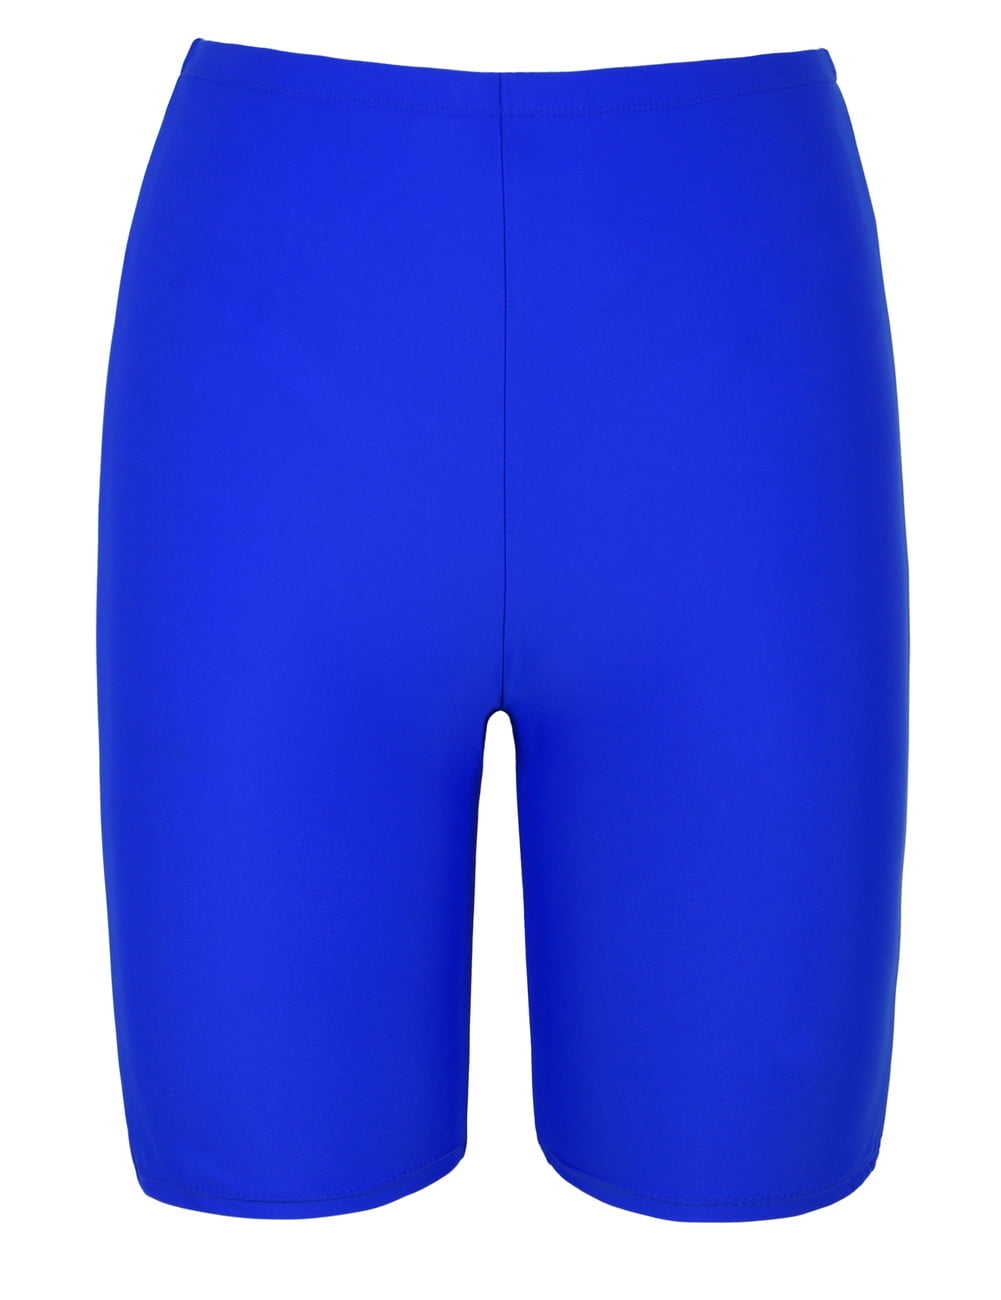 Sport Board Shorts Plus Size Tankini Swimsuit Bottom Firpearl Women's Swim Shorts UPF50 